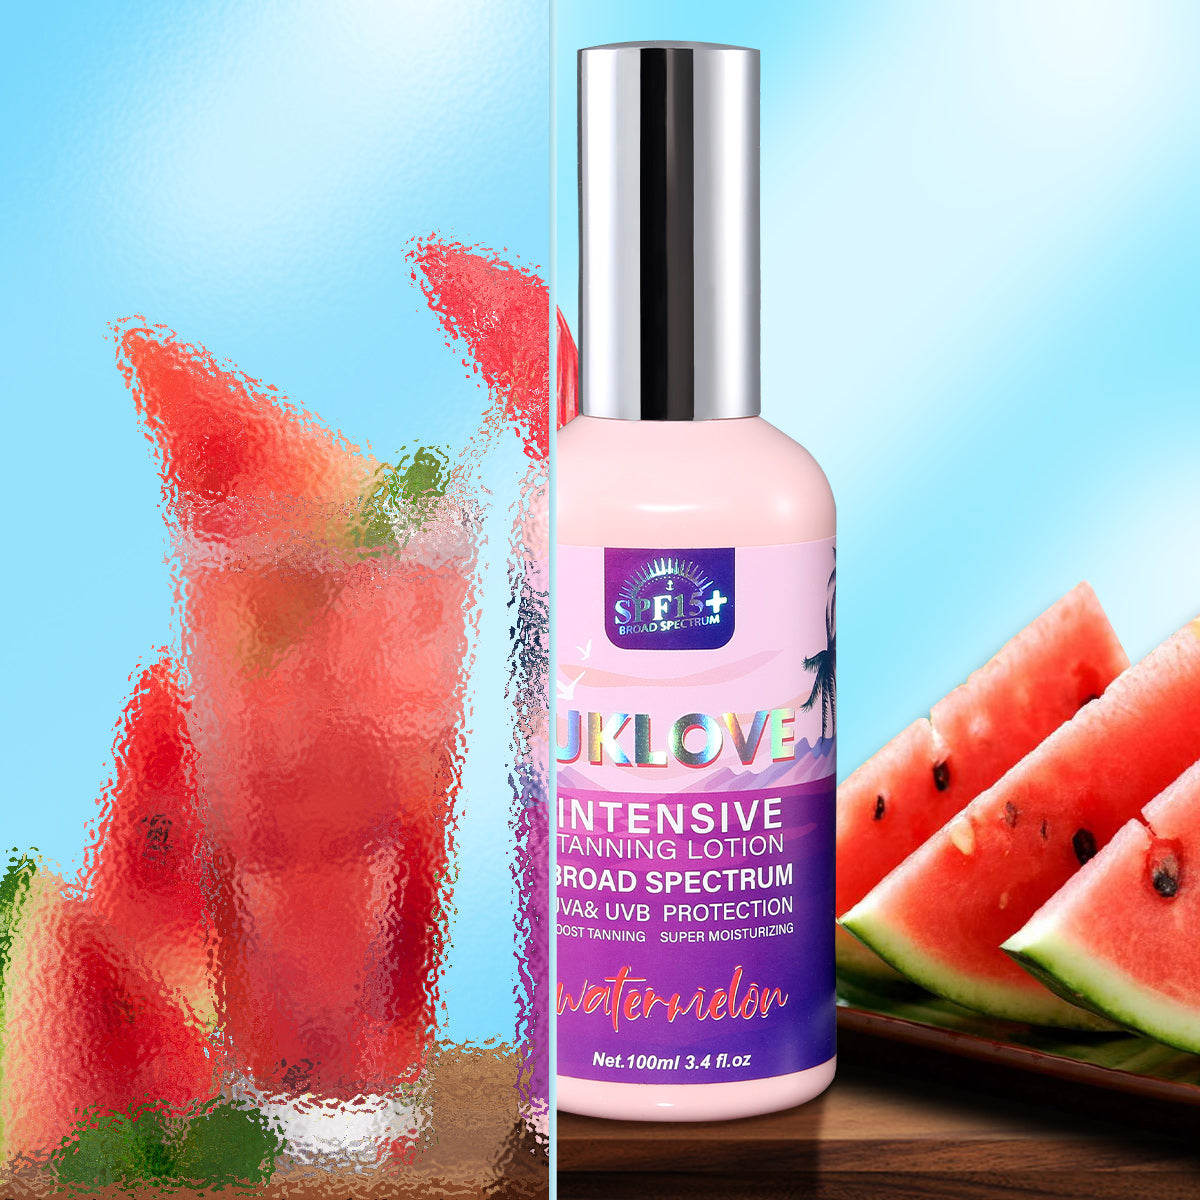 UKLOVE tanning cream SPF15+ watermelon fragrance intensive boost tanning